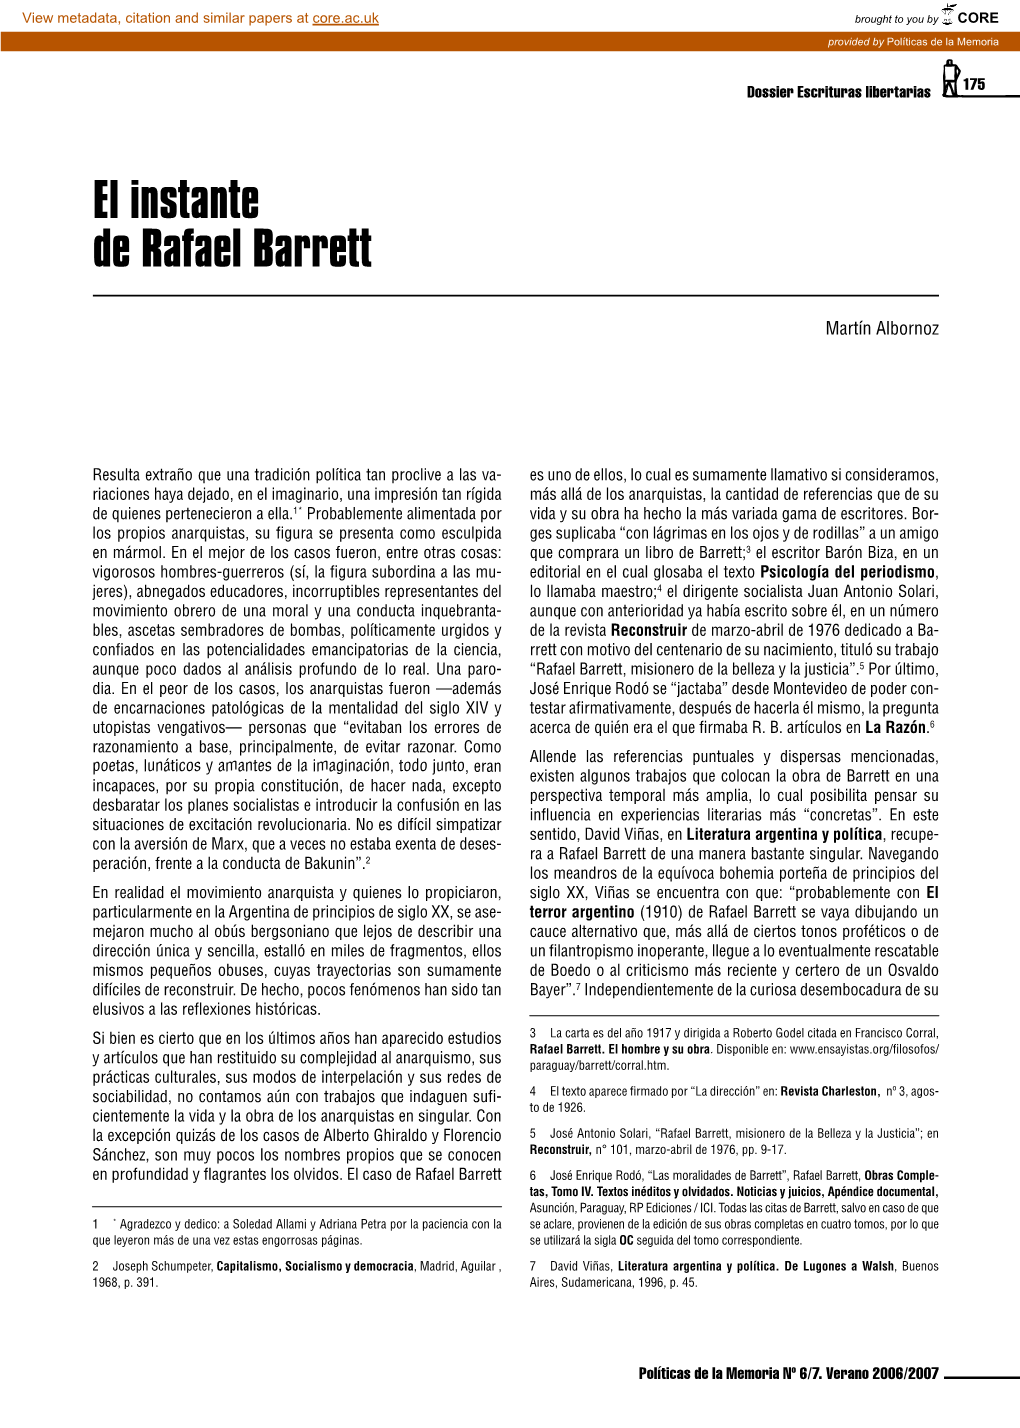 El Instante De Rafael Barrett